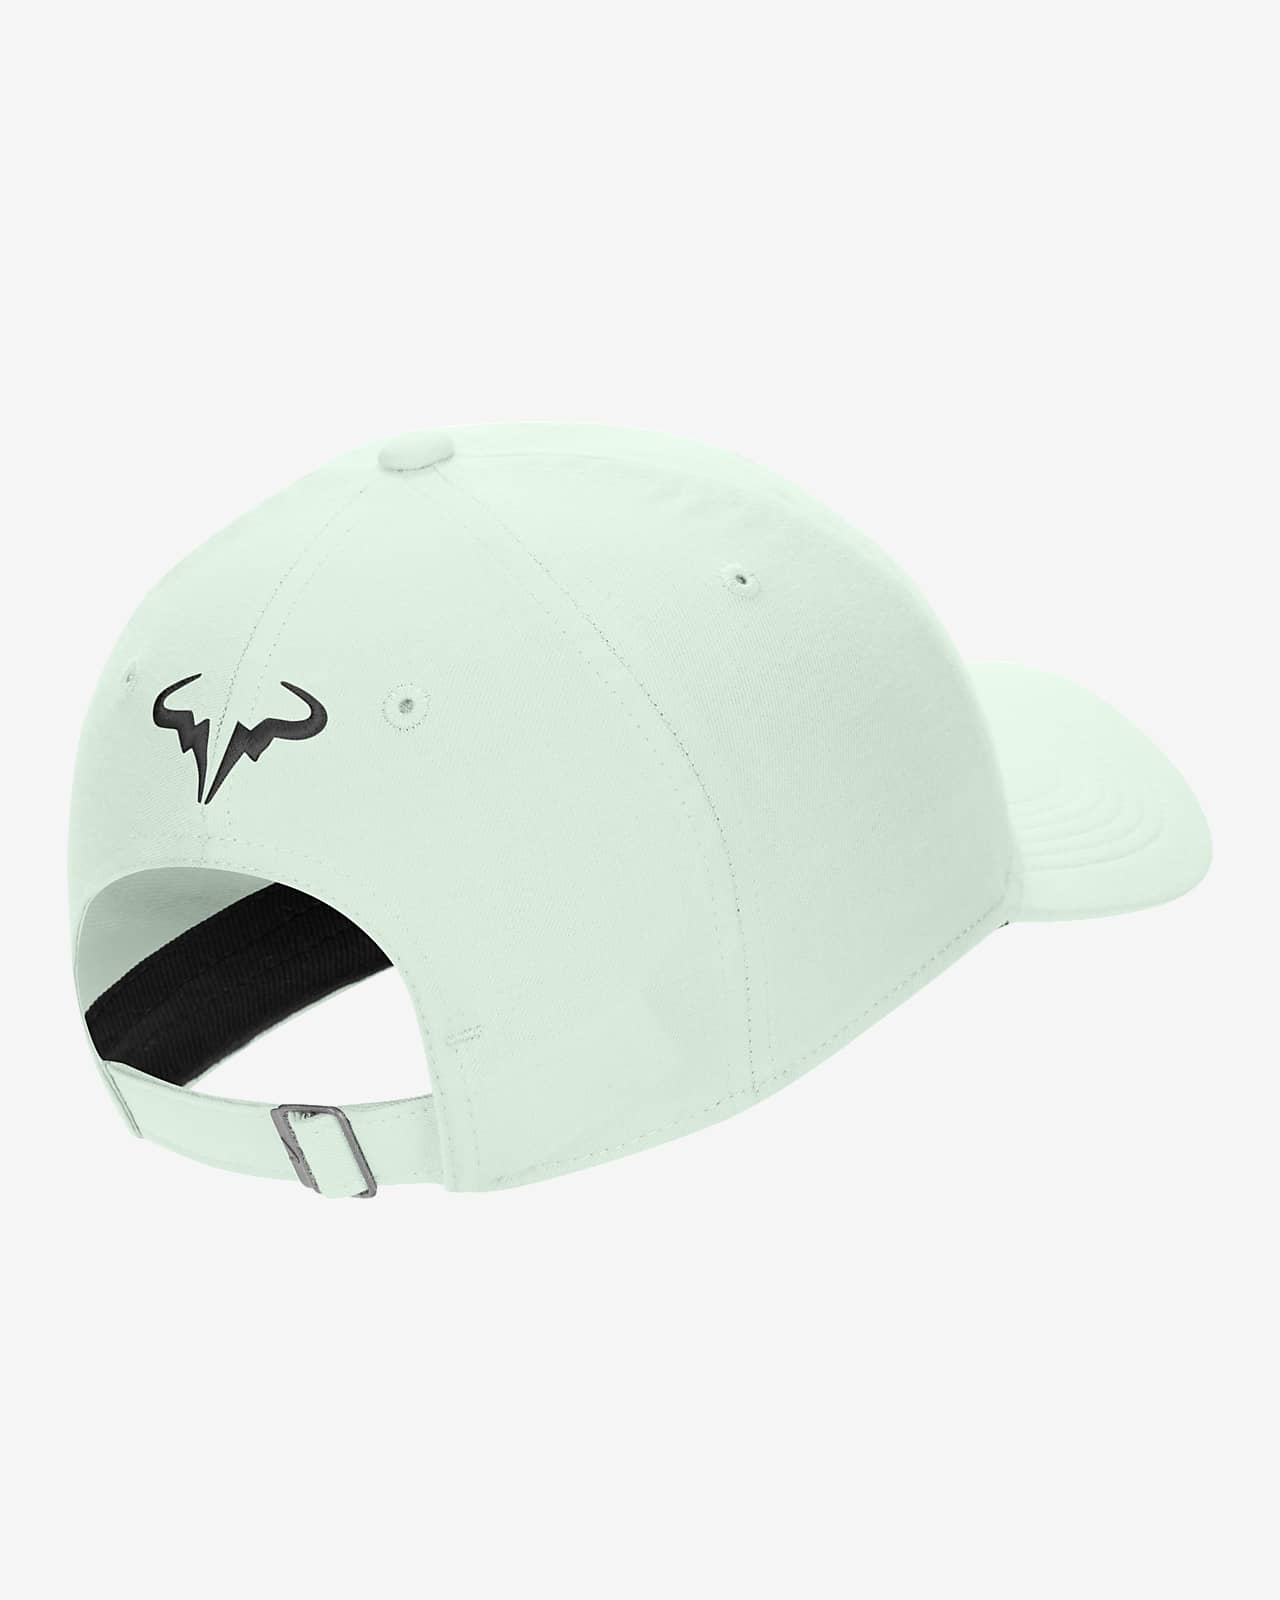 rafa tennis hat